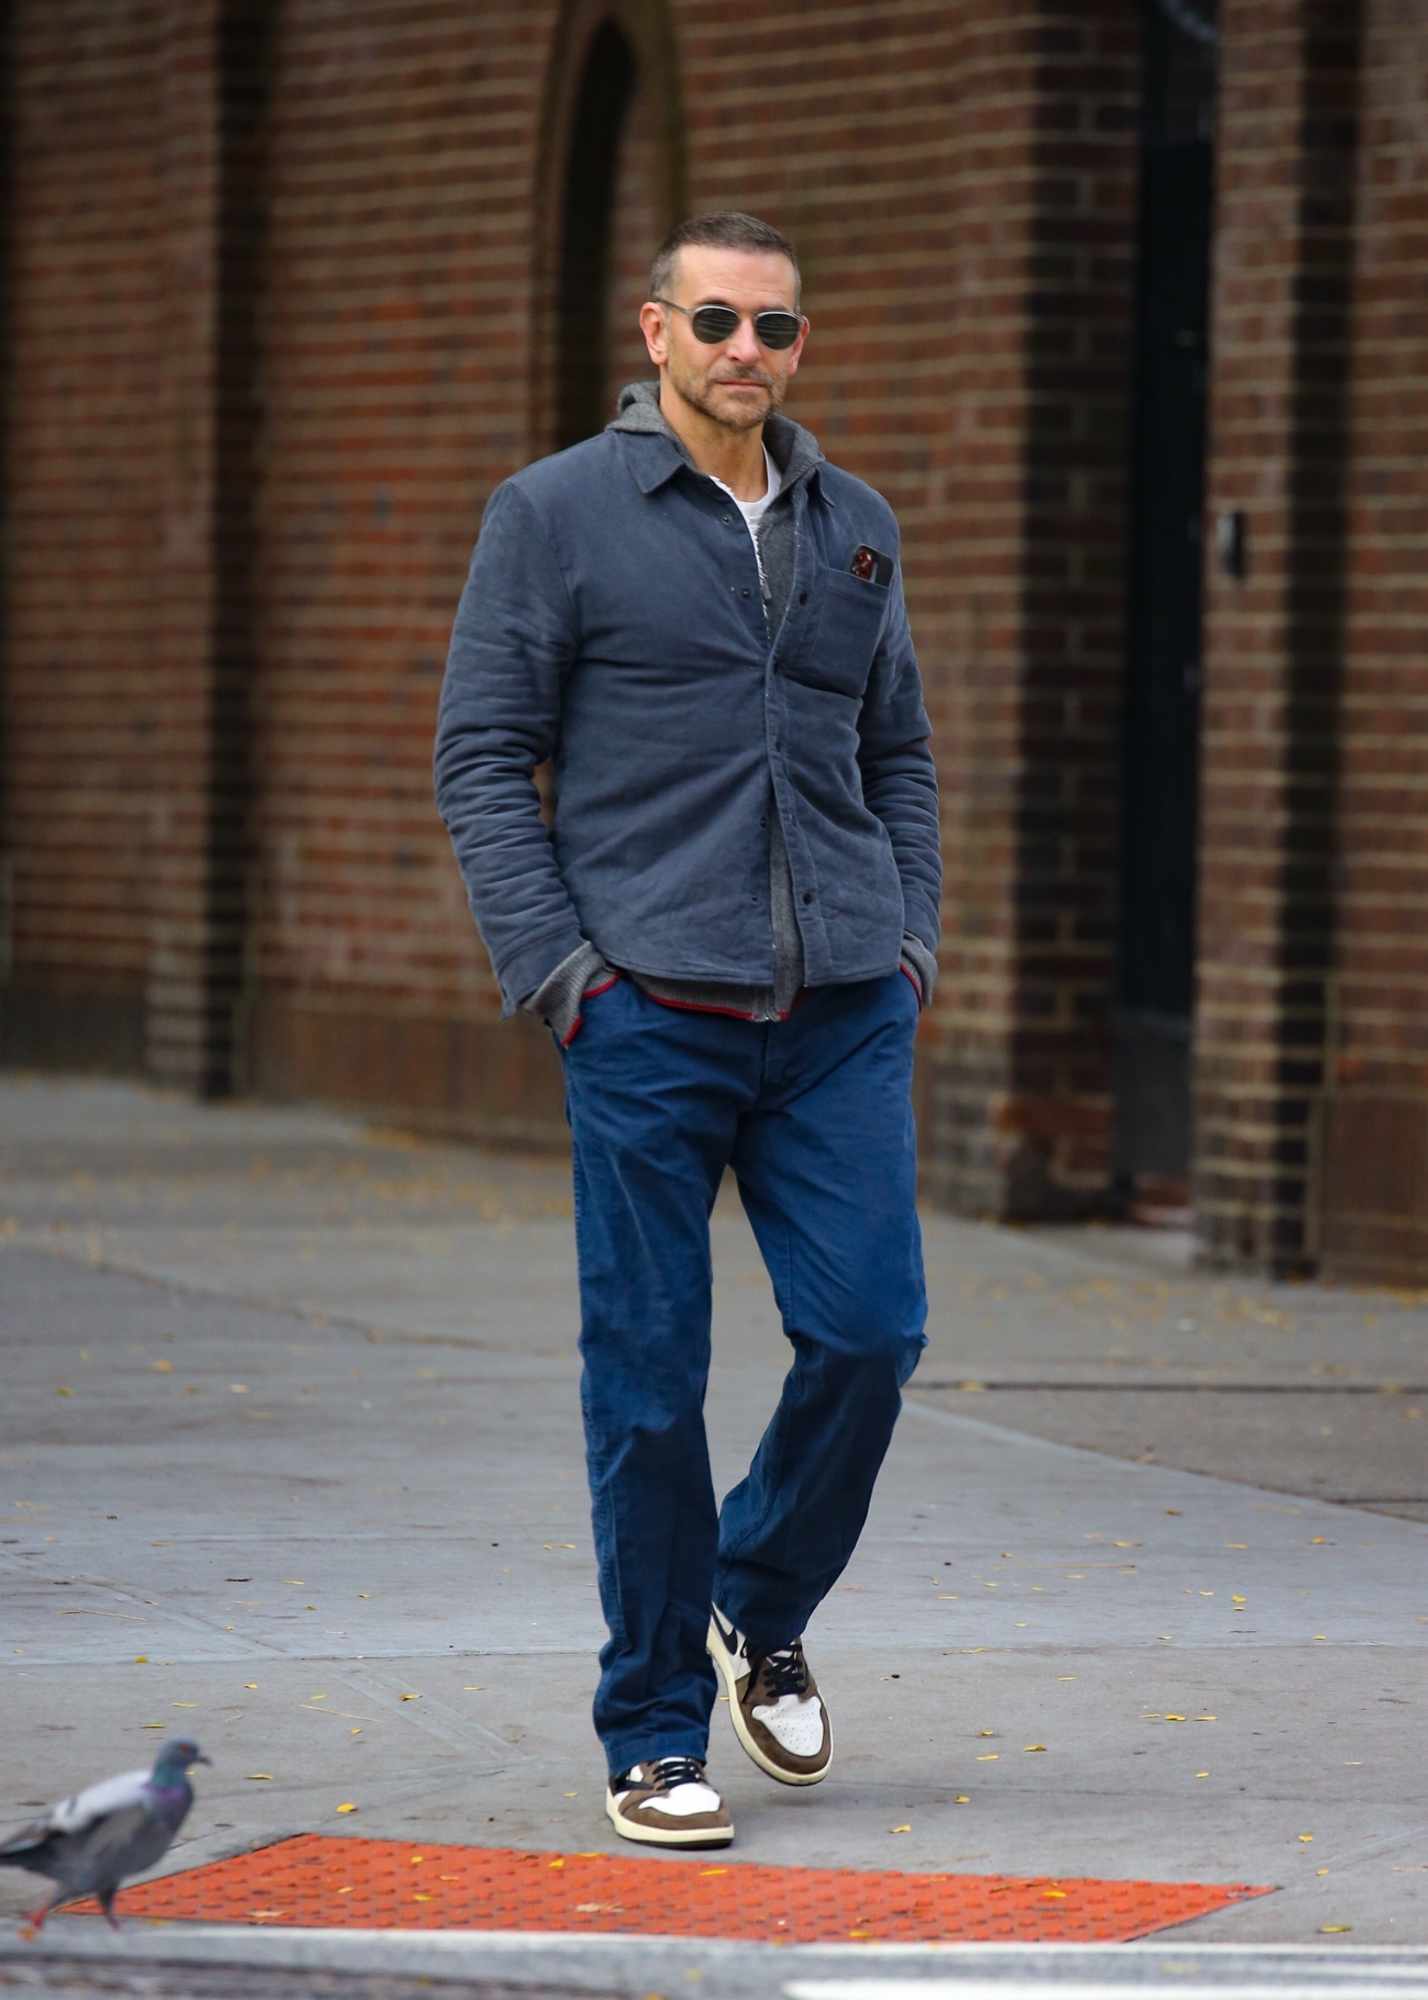 Rumored dating couple Bradley Cooper & Gigi Hadid are seen in New York